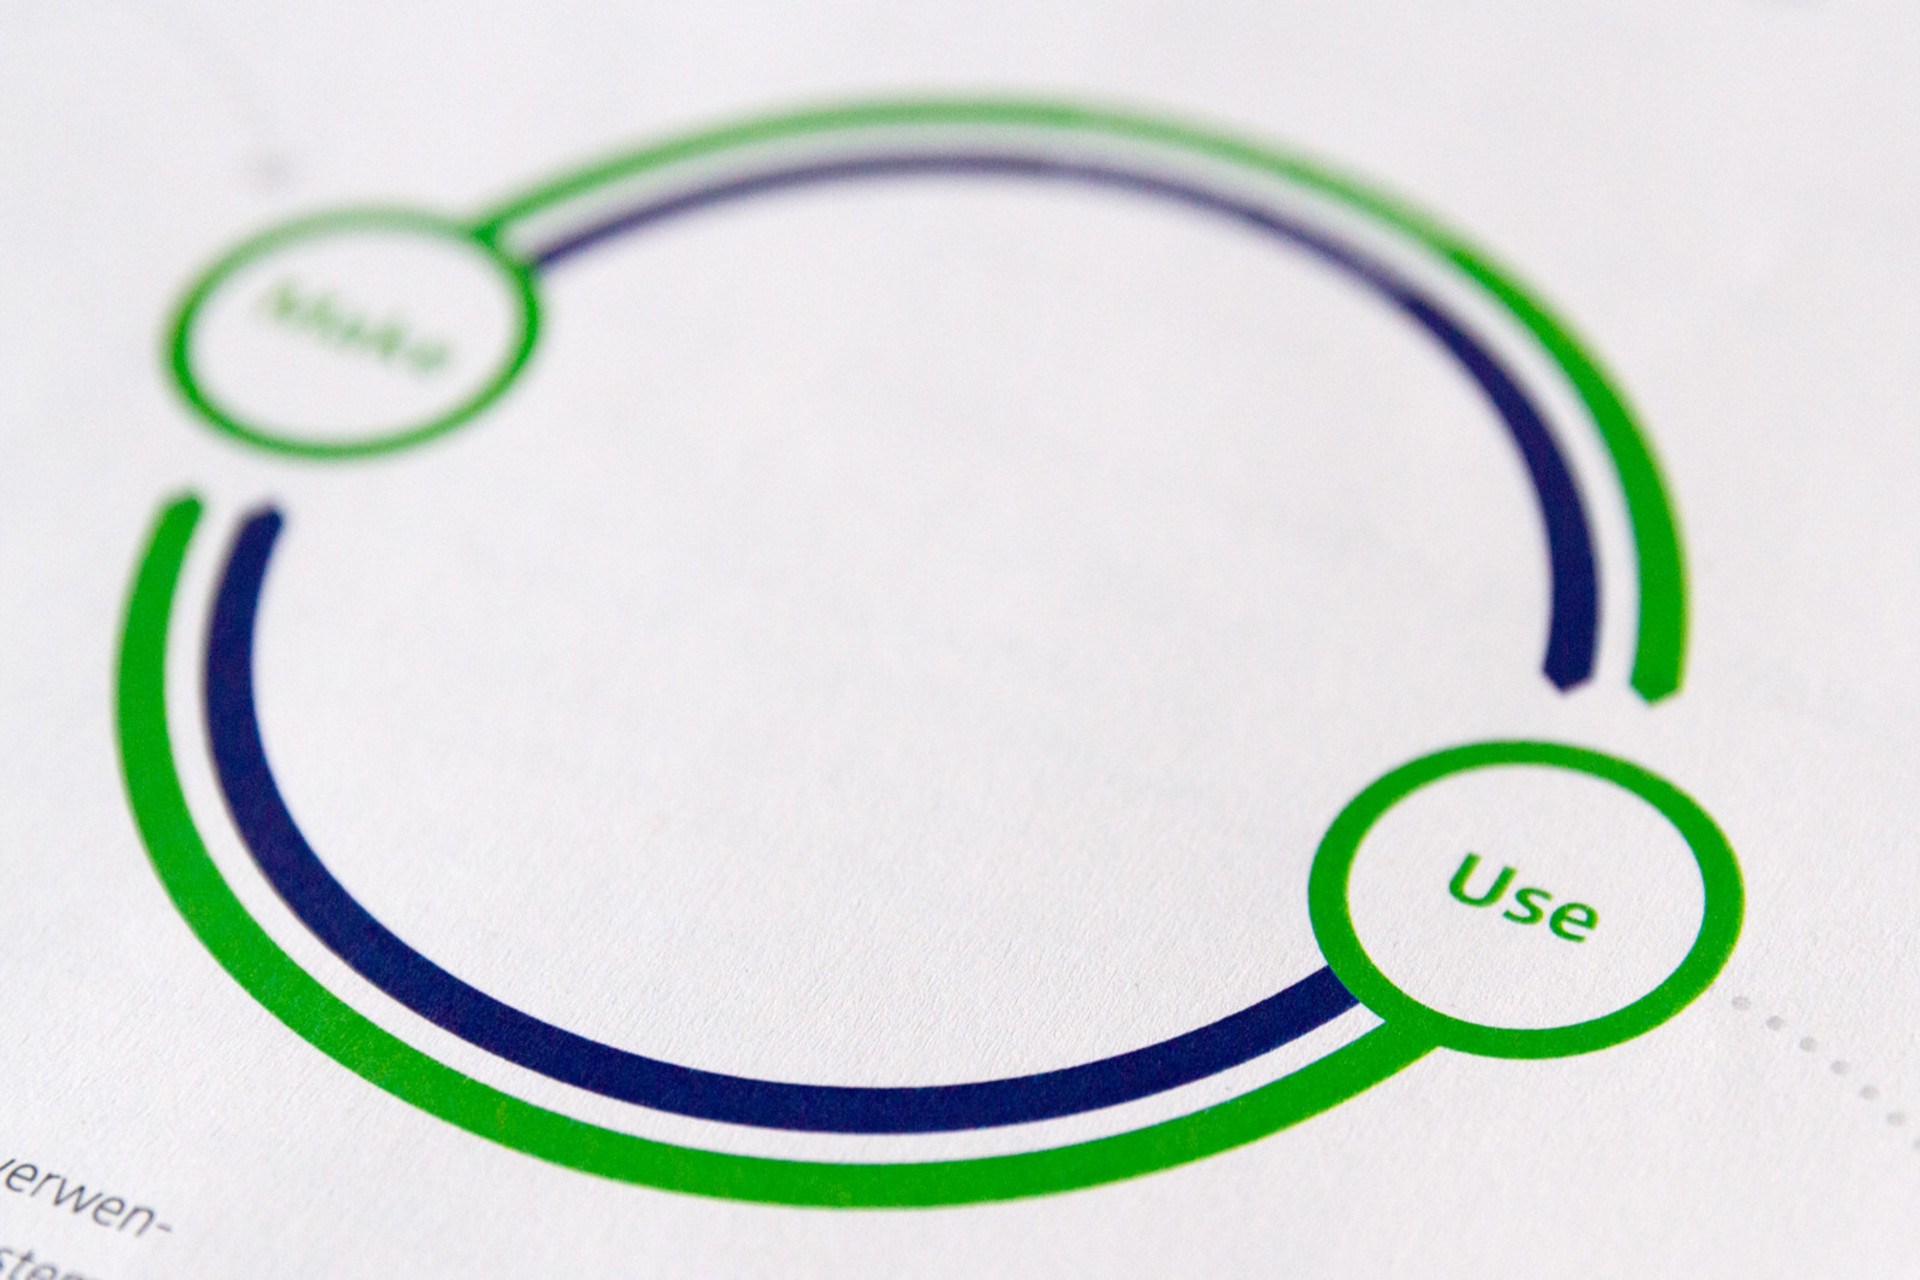 Kreislaufmodell aus dem DGNB Circular Economy Report: Make and Use